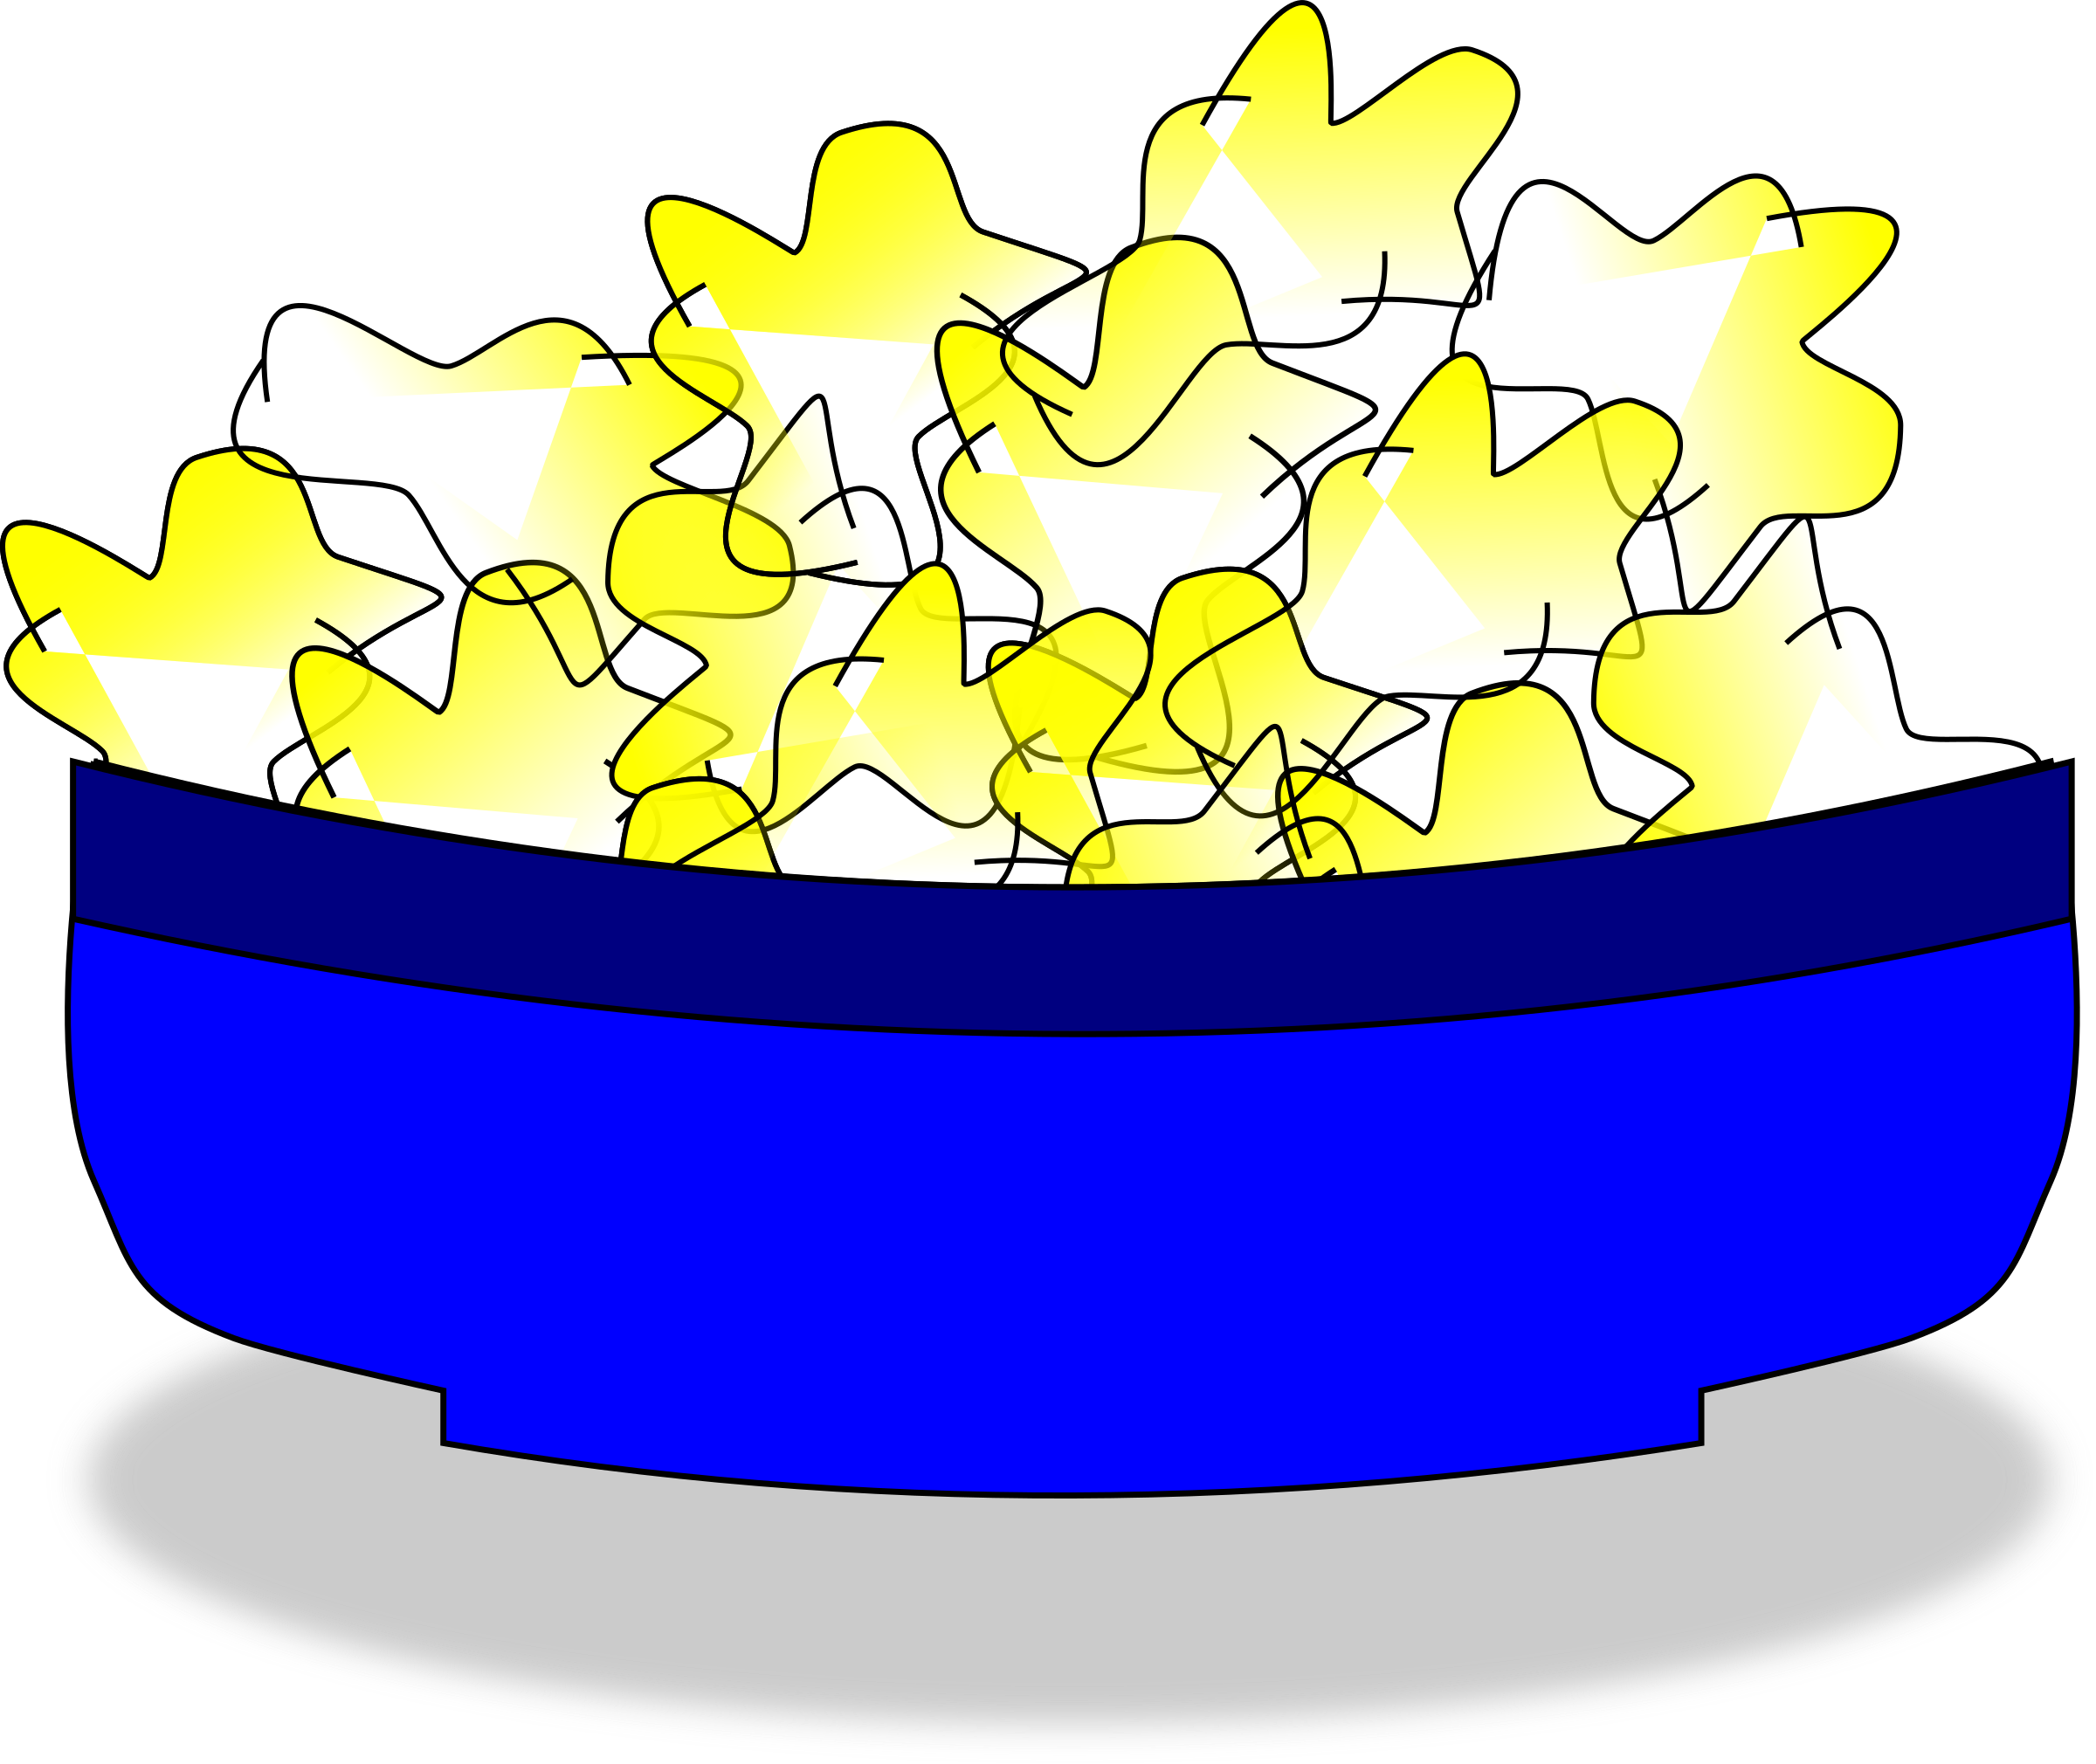 Bowl Of Popcorn By Algotruneman